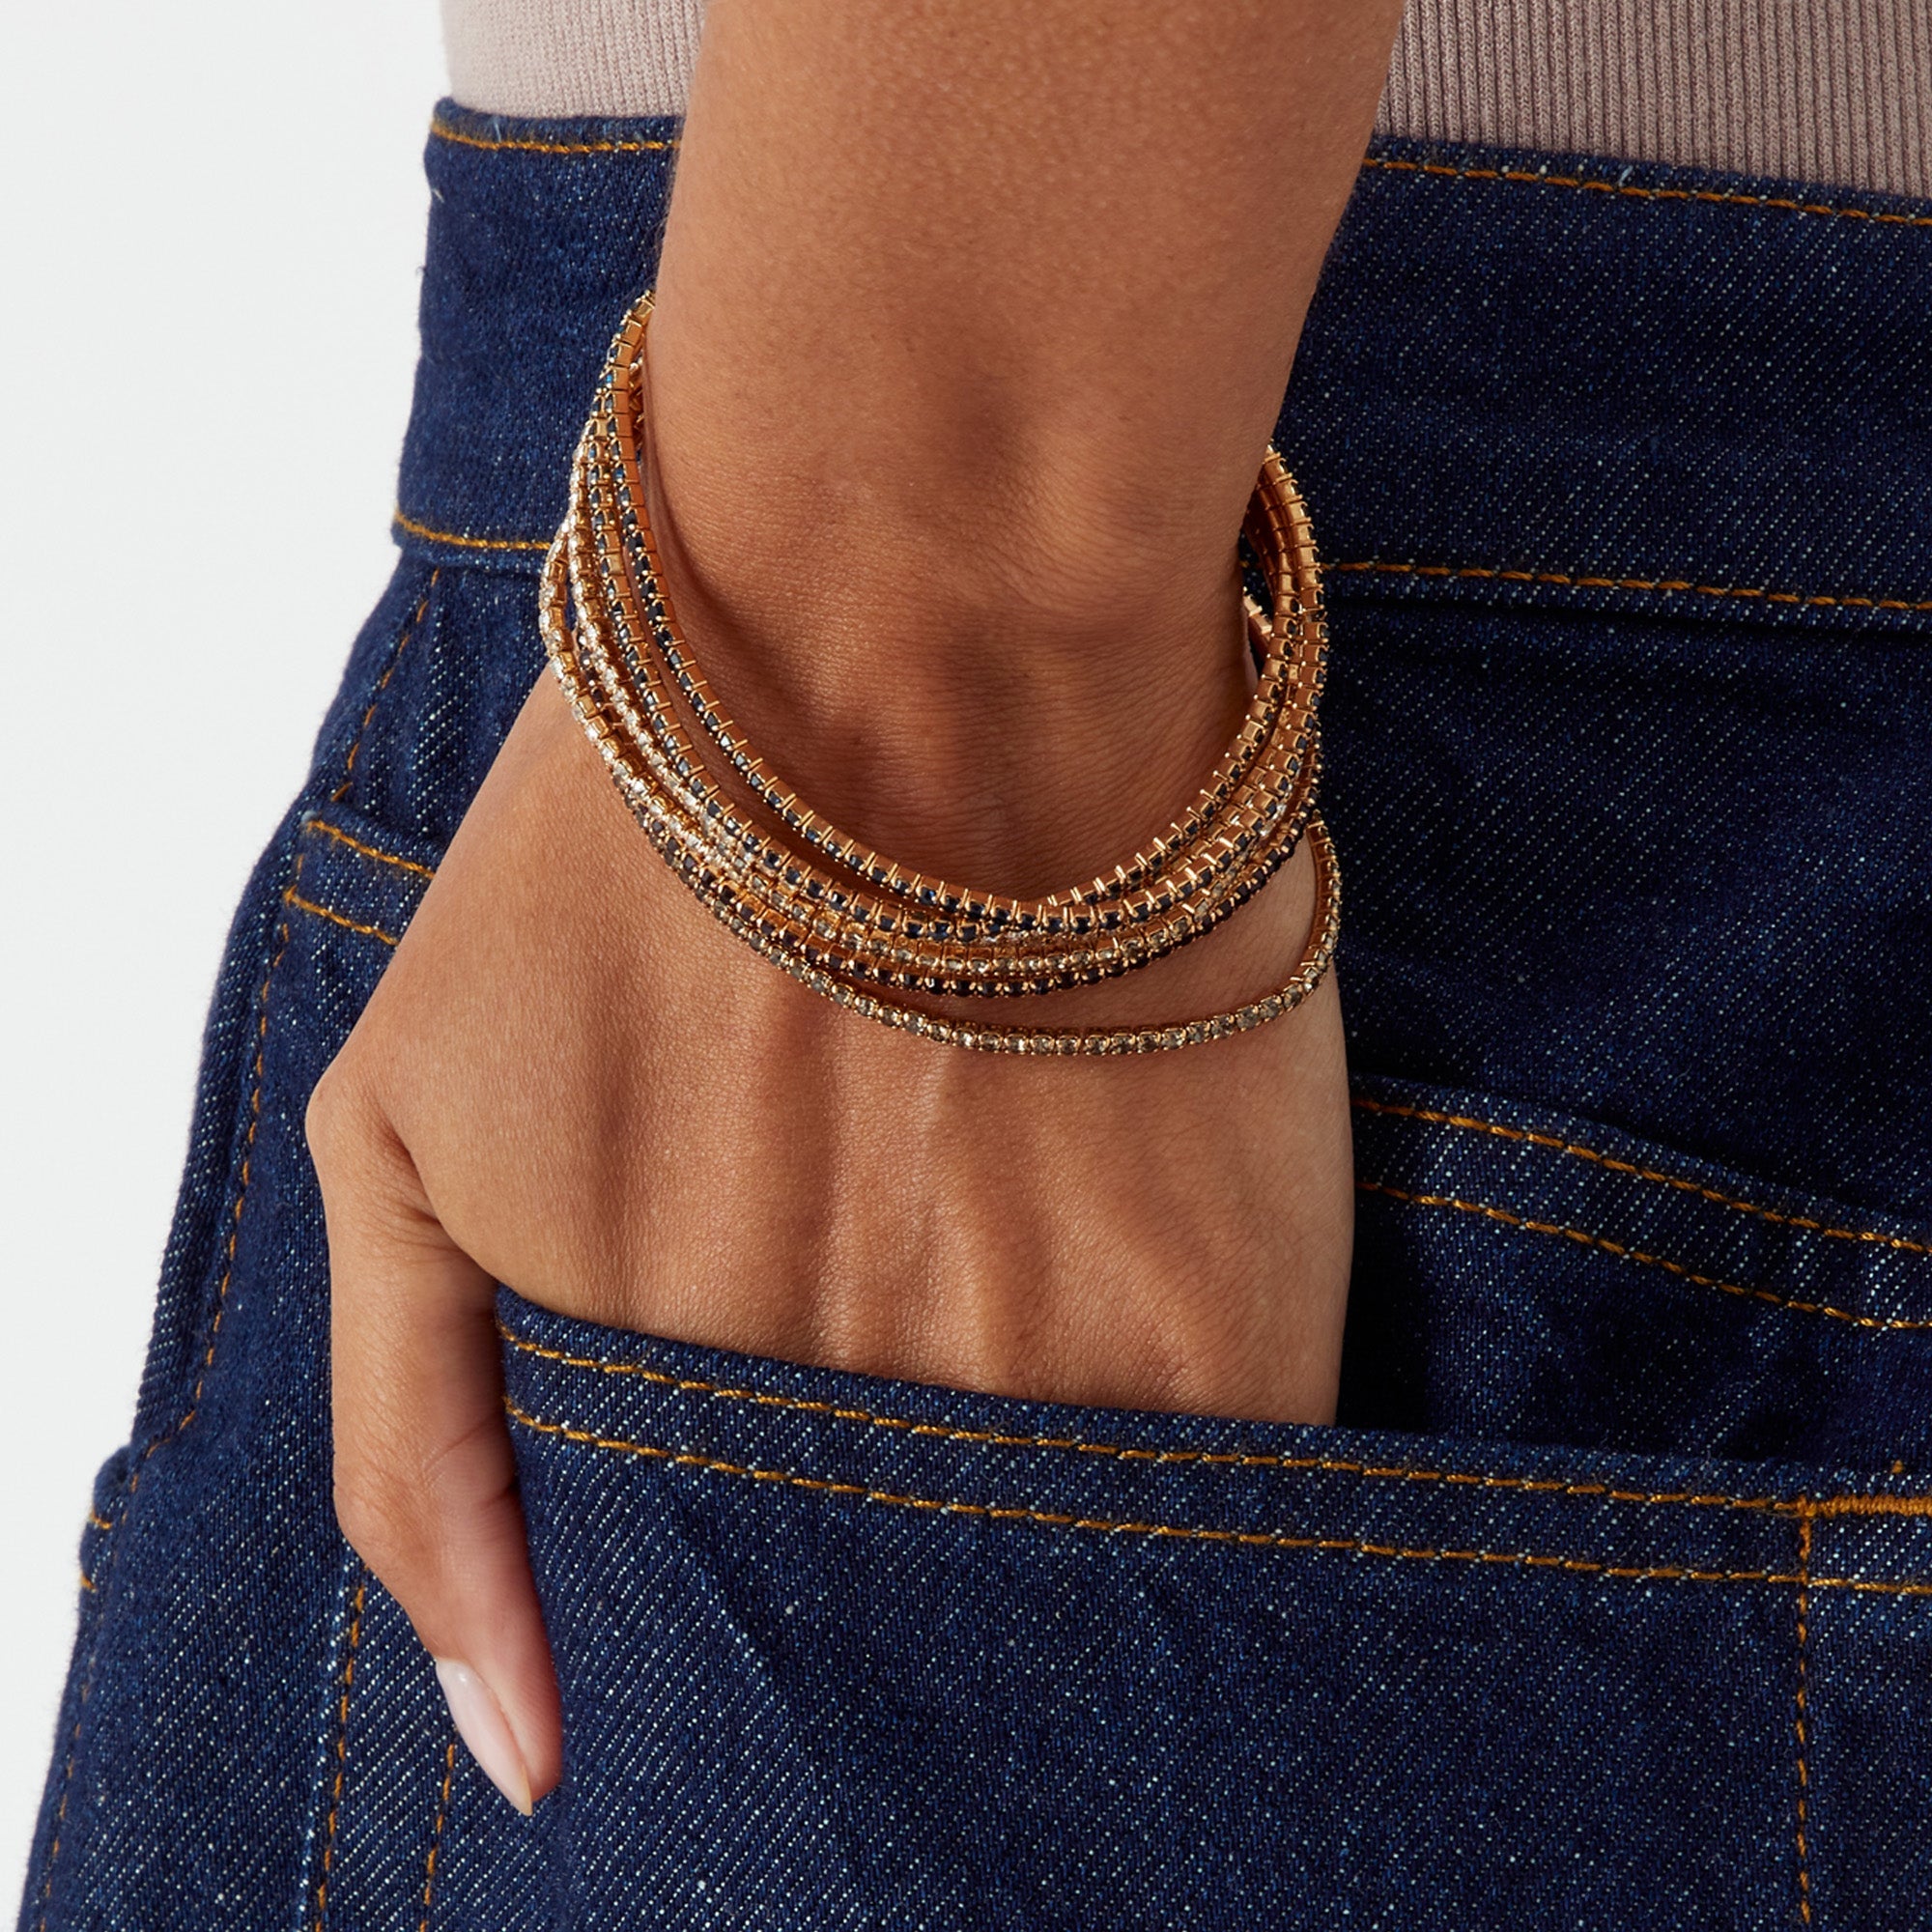 Accessorize London Women's Black 7 Pack Tiny Cupchain Stretch Bracelet